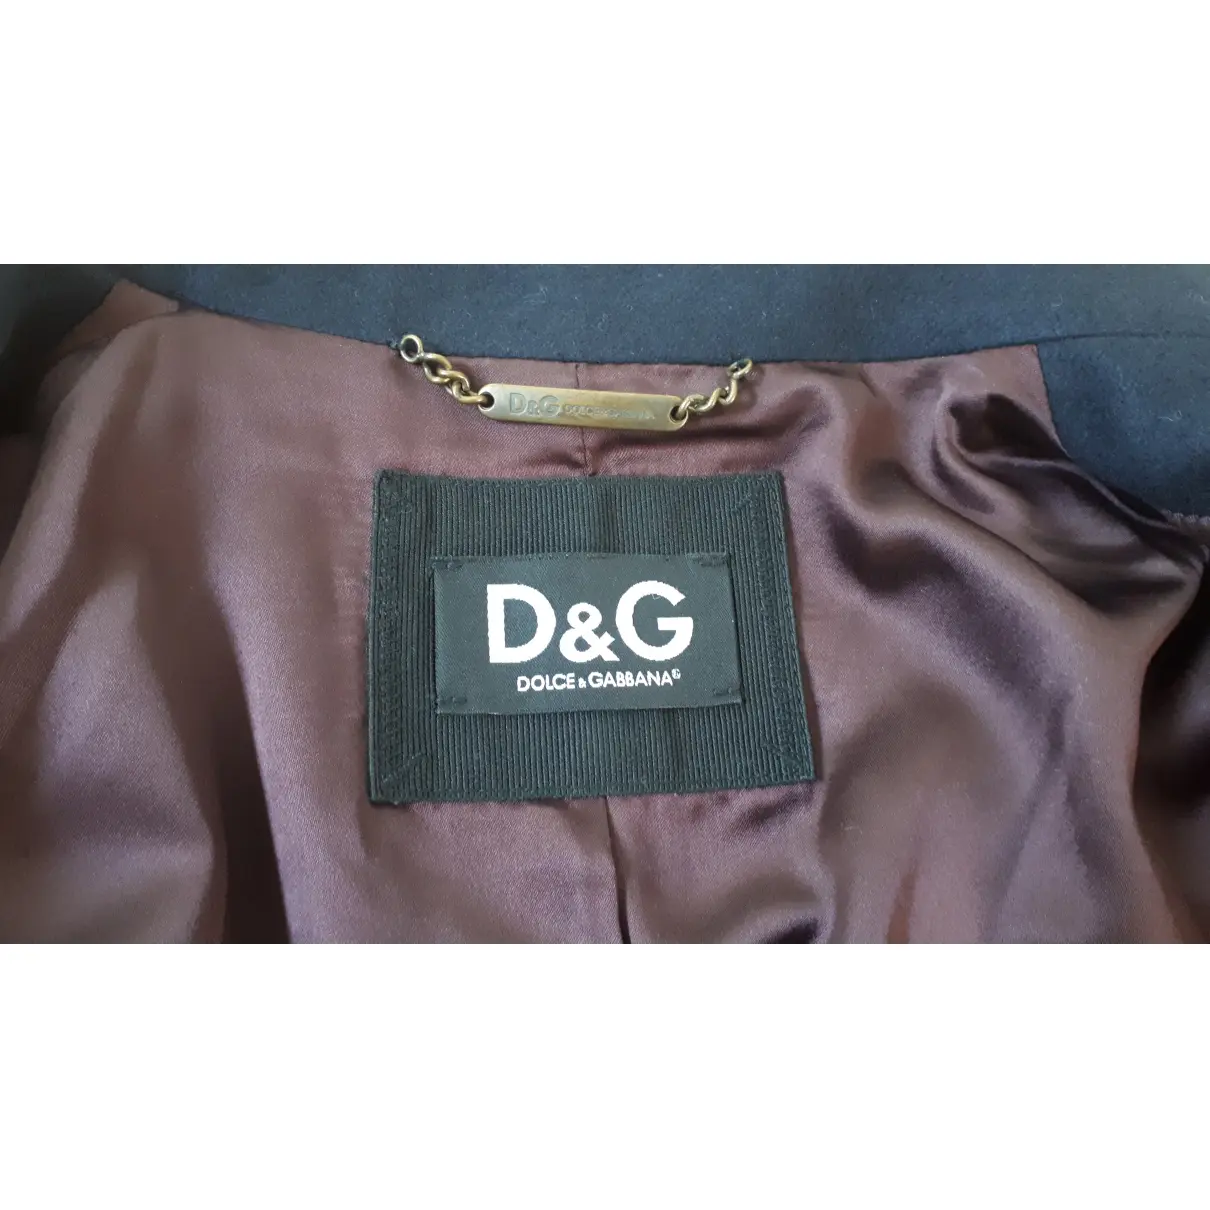 Wool jacket D&G